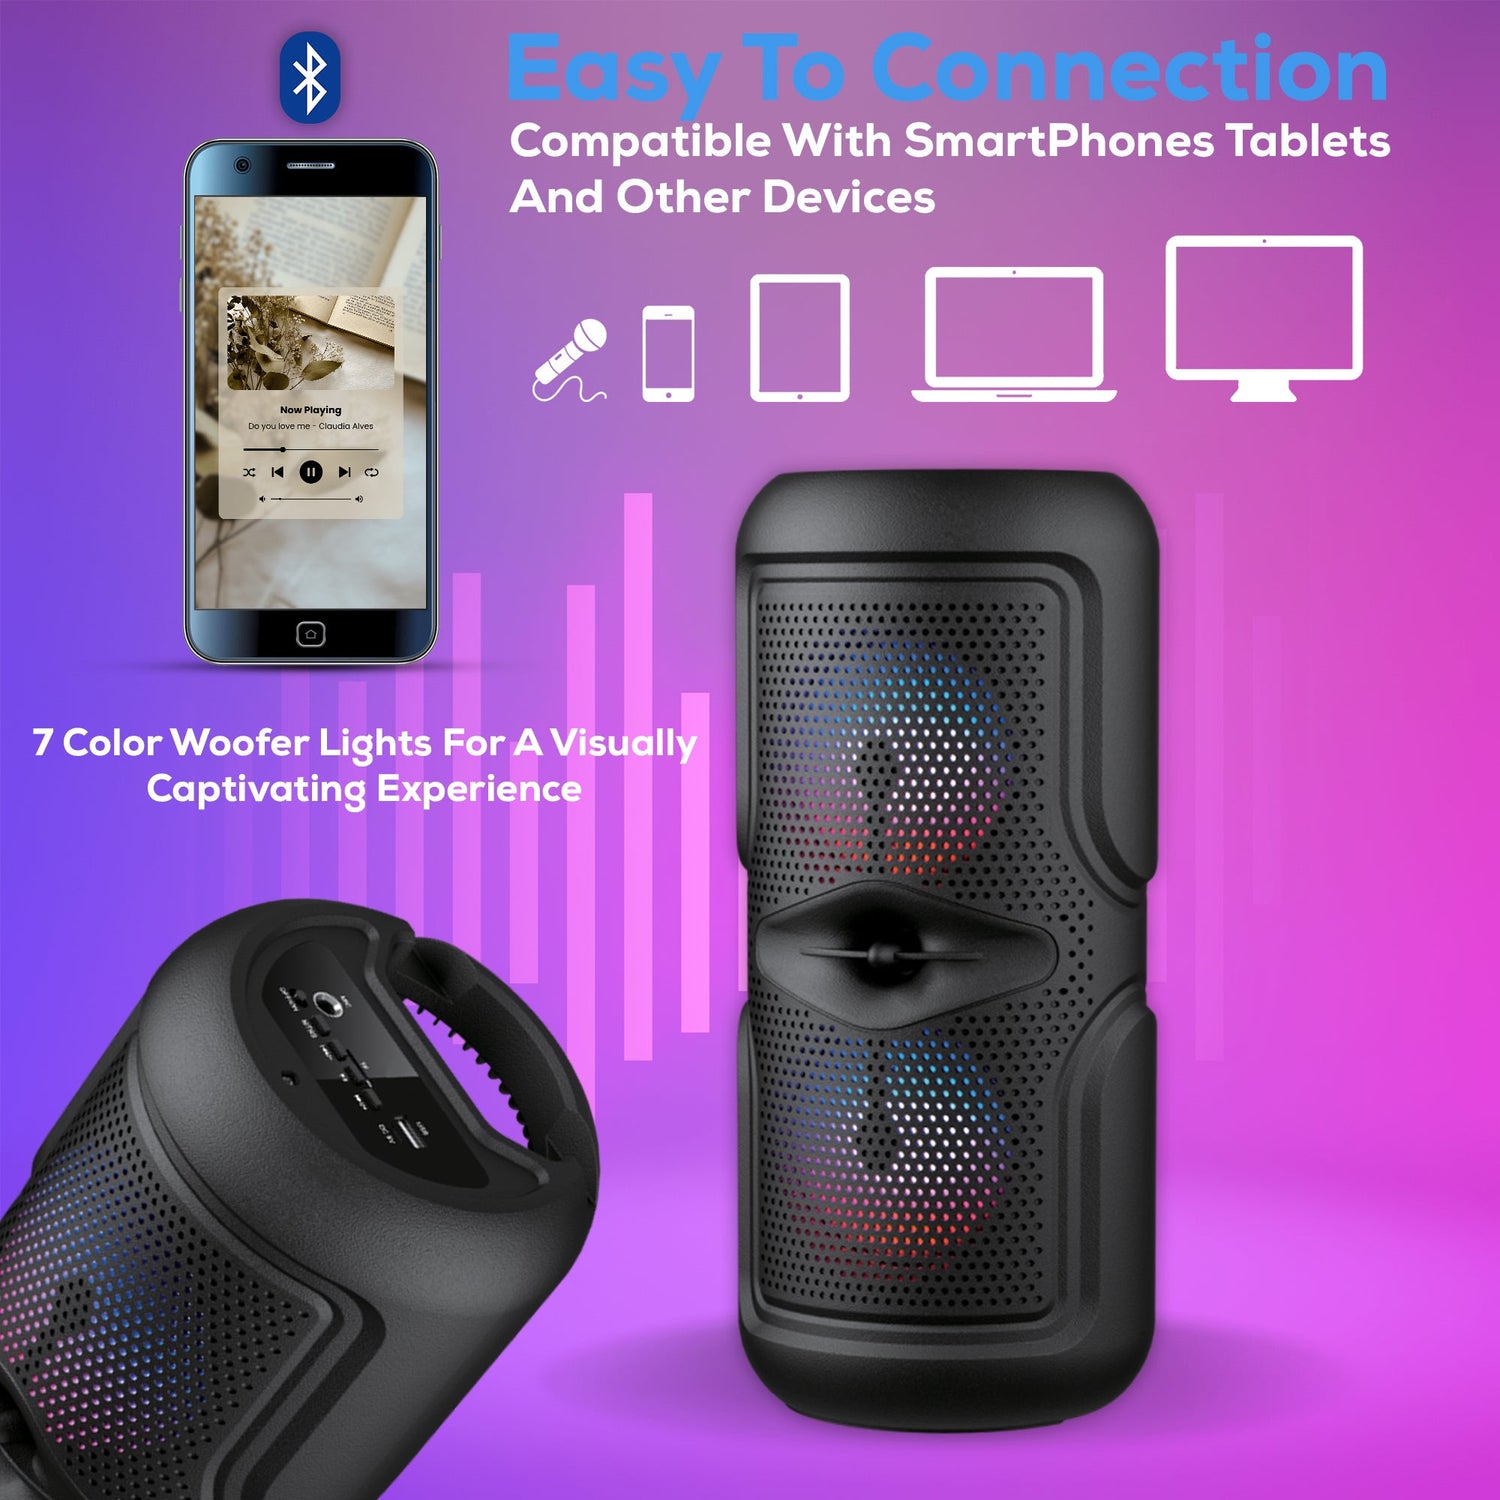 Audiobox ABX-240R Dual 4” Portable Bluetooth Speaker With Lights - Top ElectrosSpeakersABX-240R810059431751